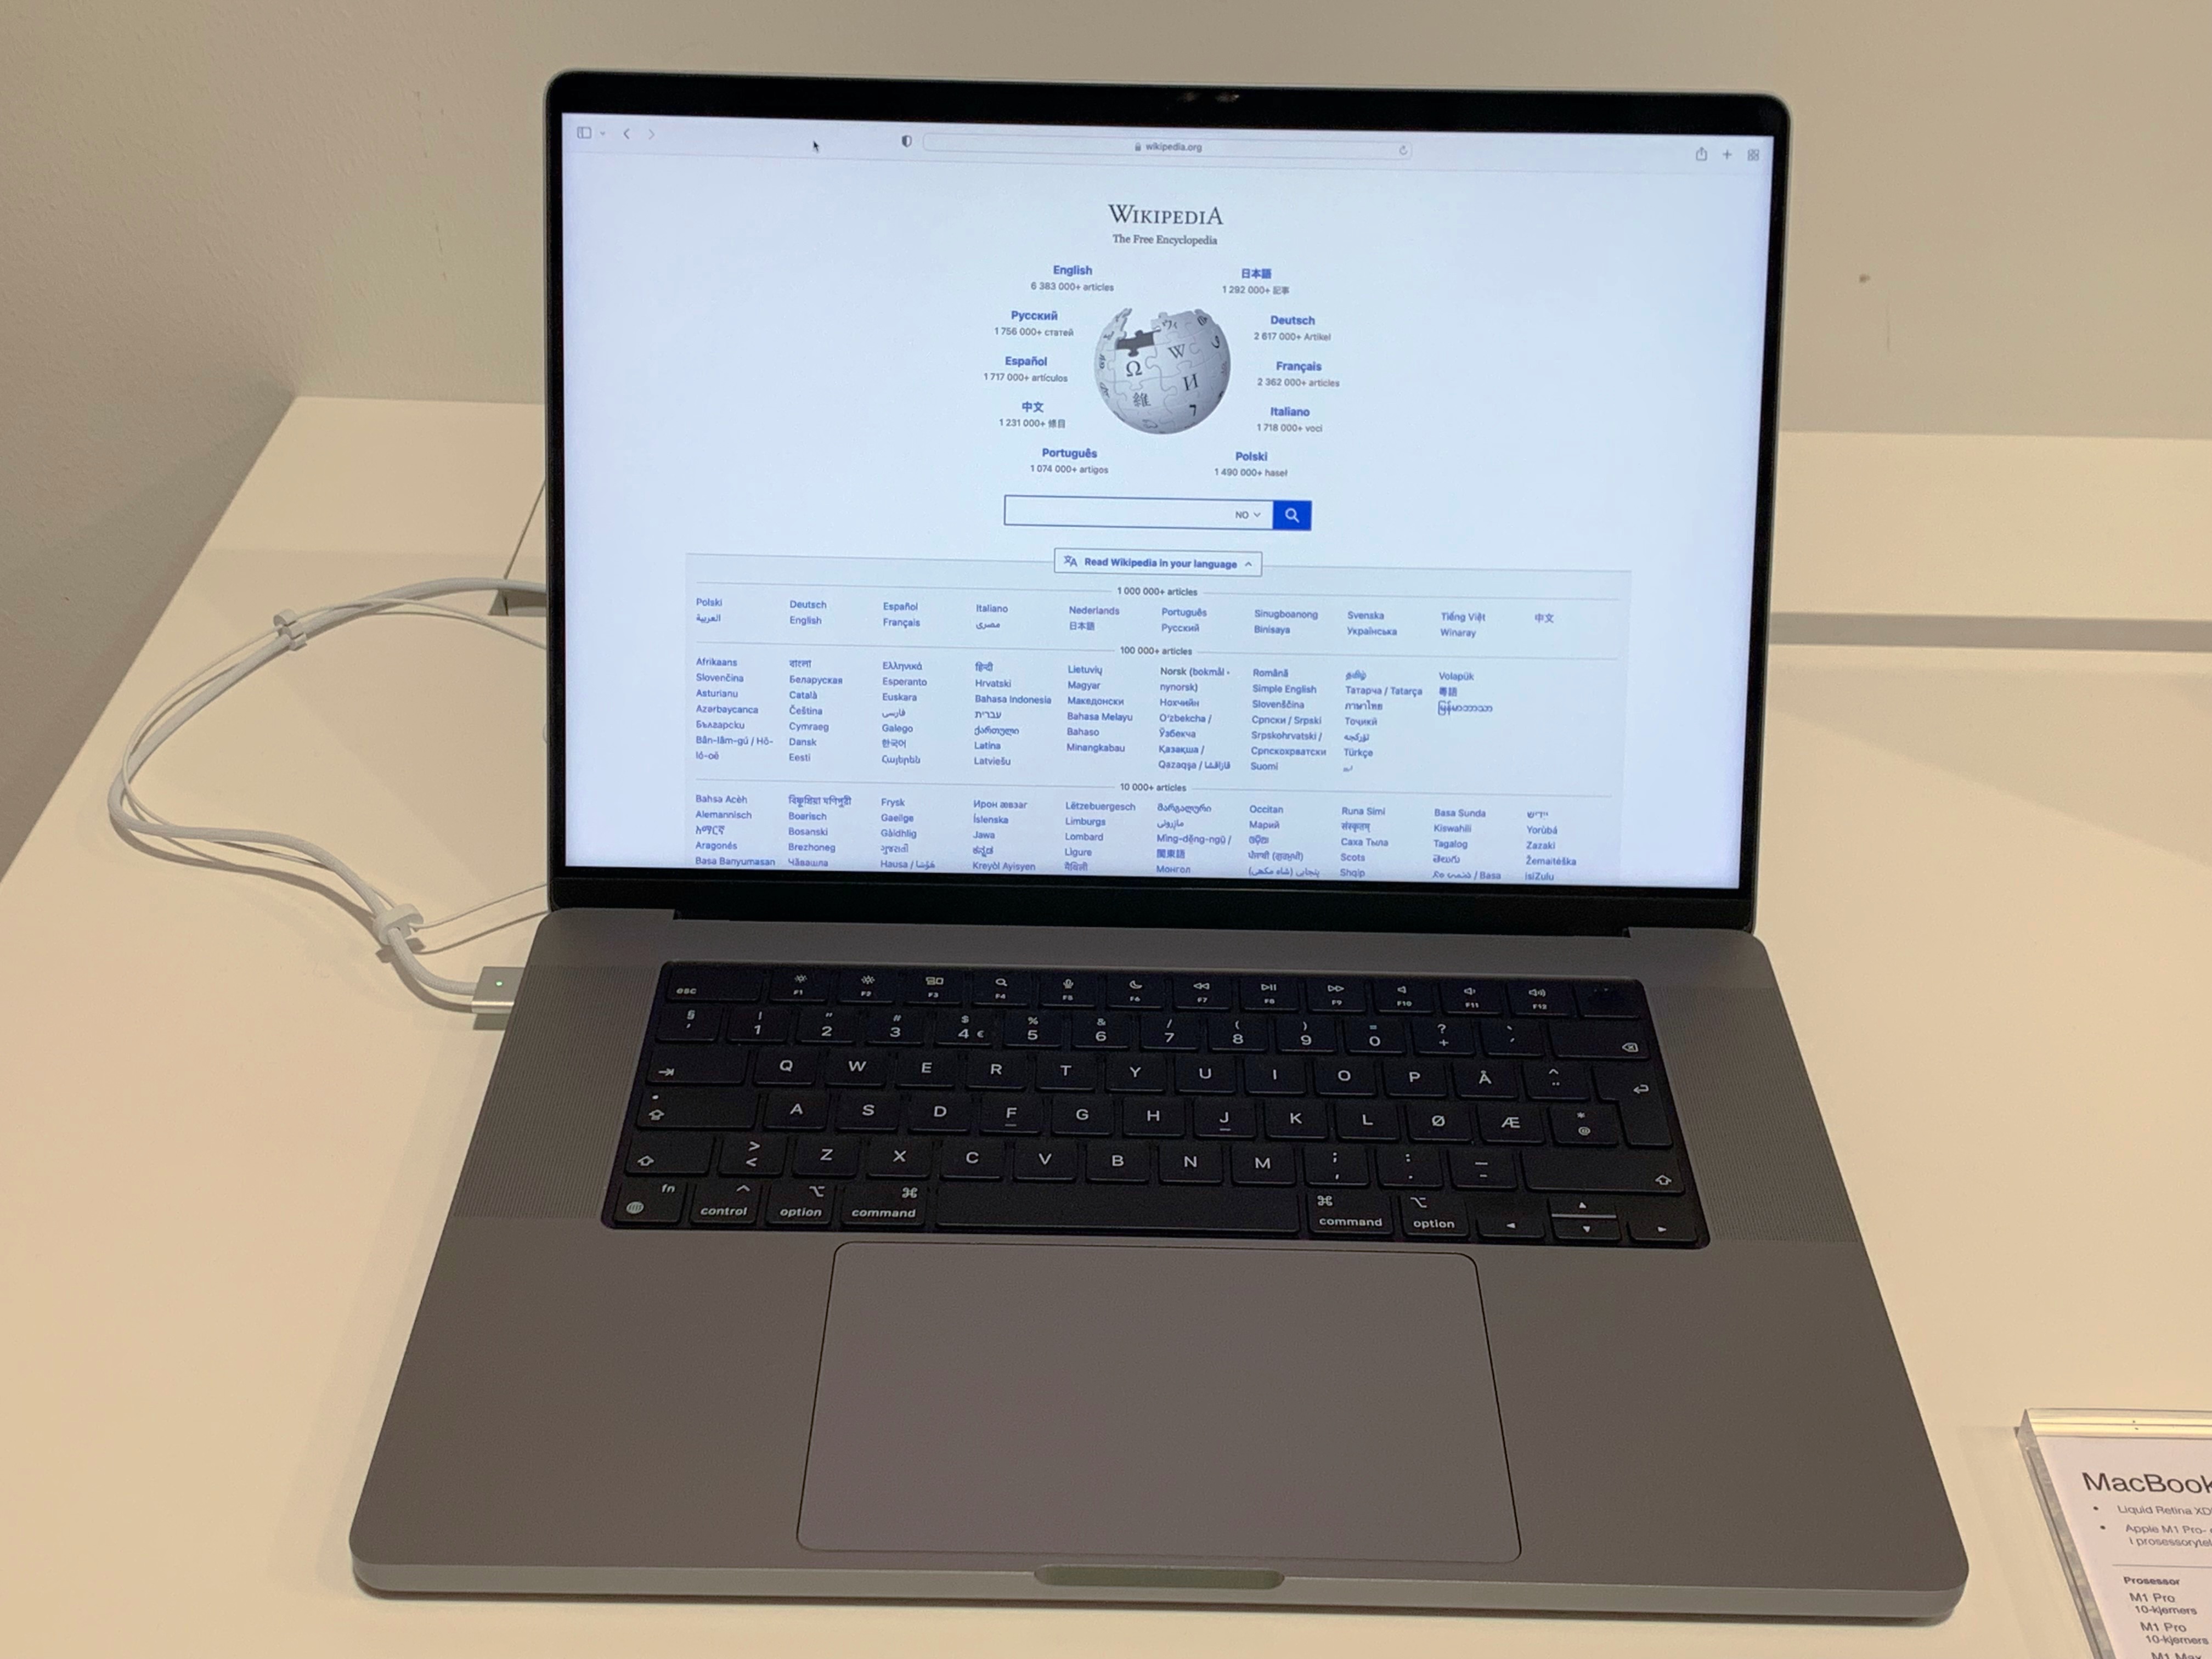 MacBook storage bar showing full capacity